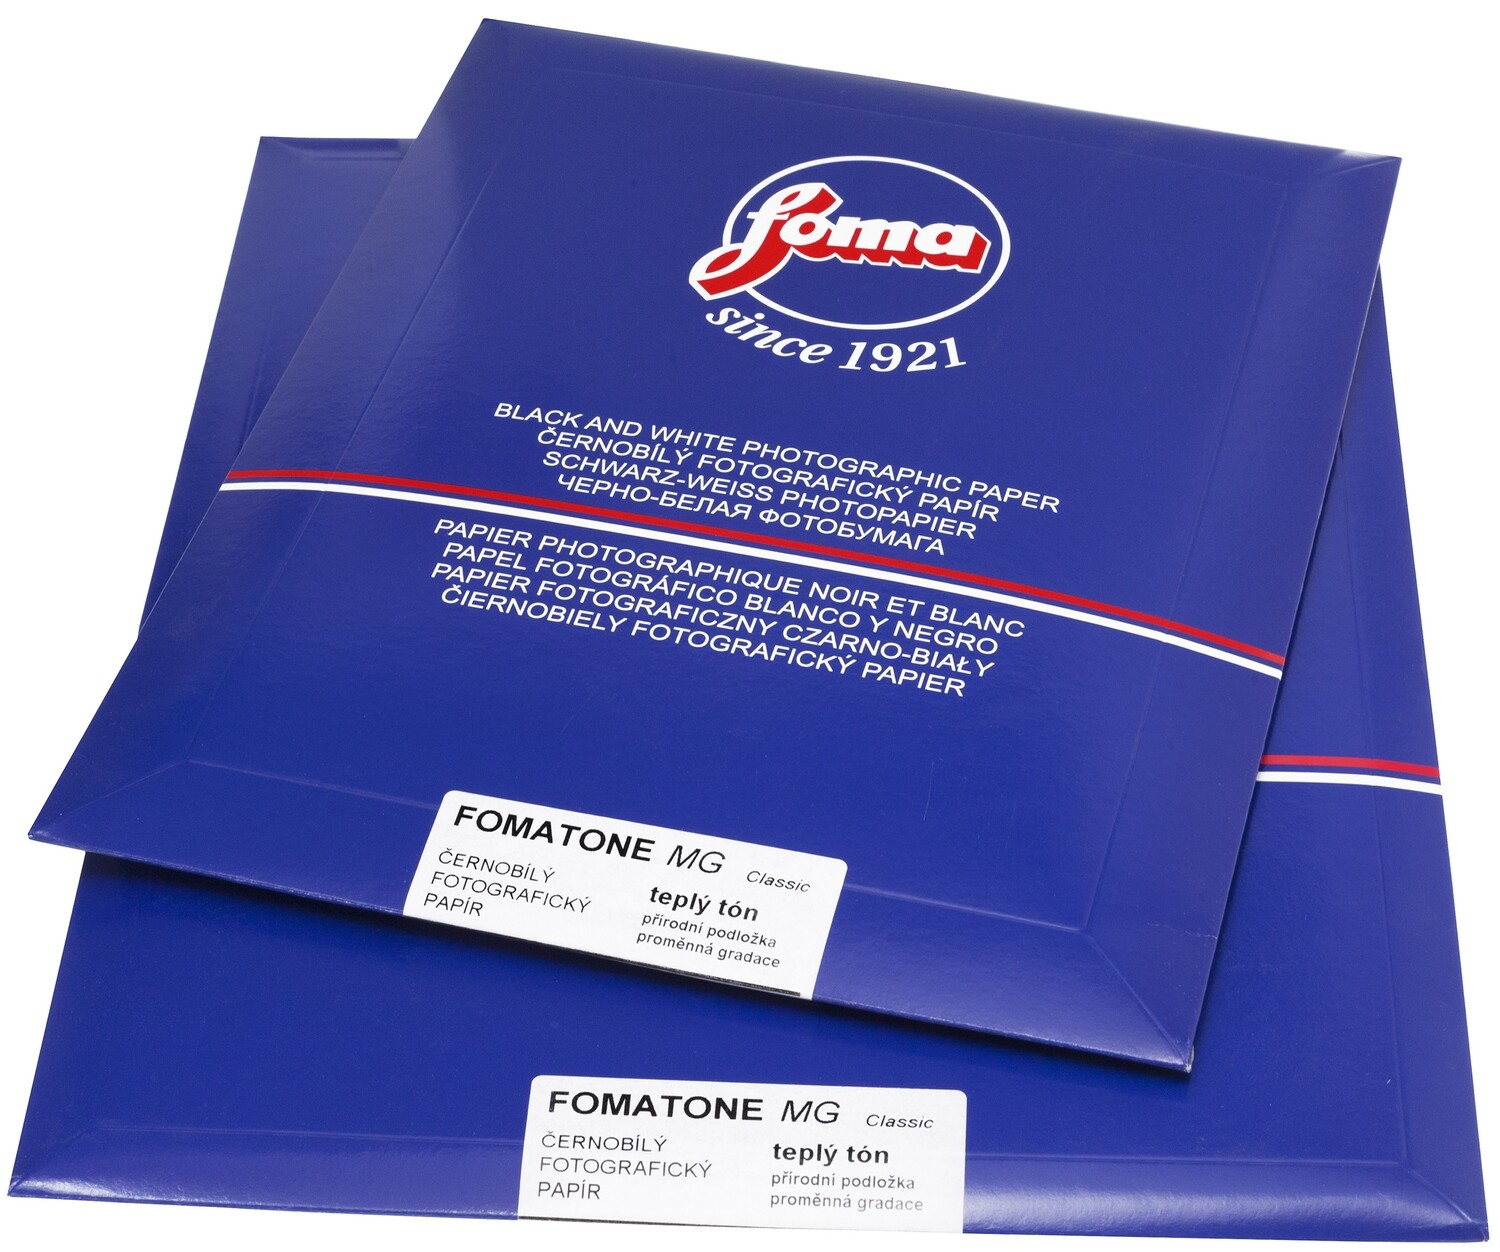 FOMA Fomatone MG 131 Classic warmtone Glossy (Baryt) 12.7x17.8cm  / 5x7 Inch - 100 sheets - Gradation Variabel  -